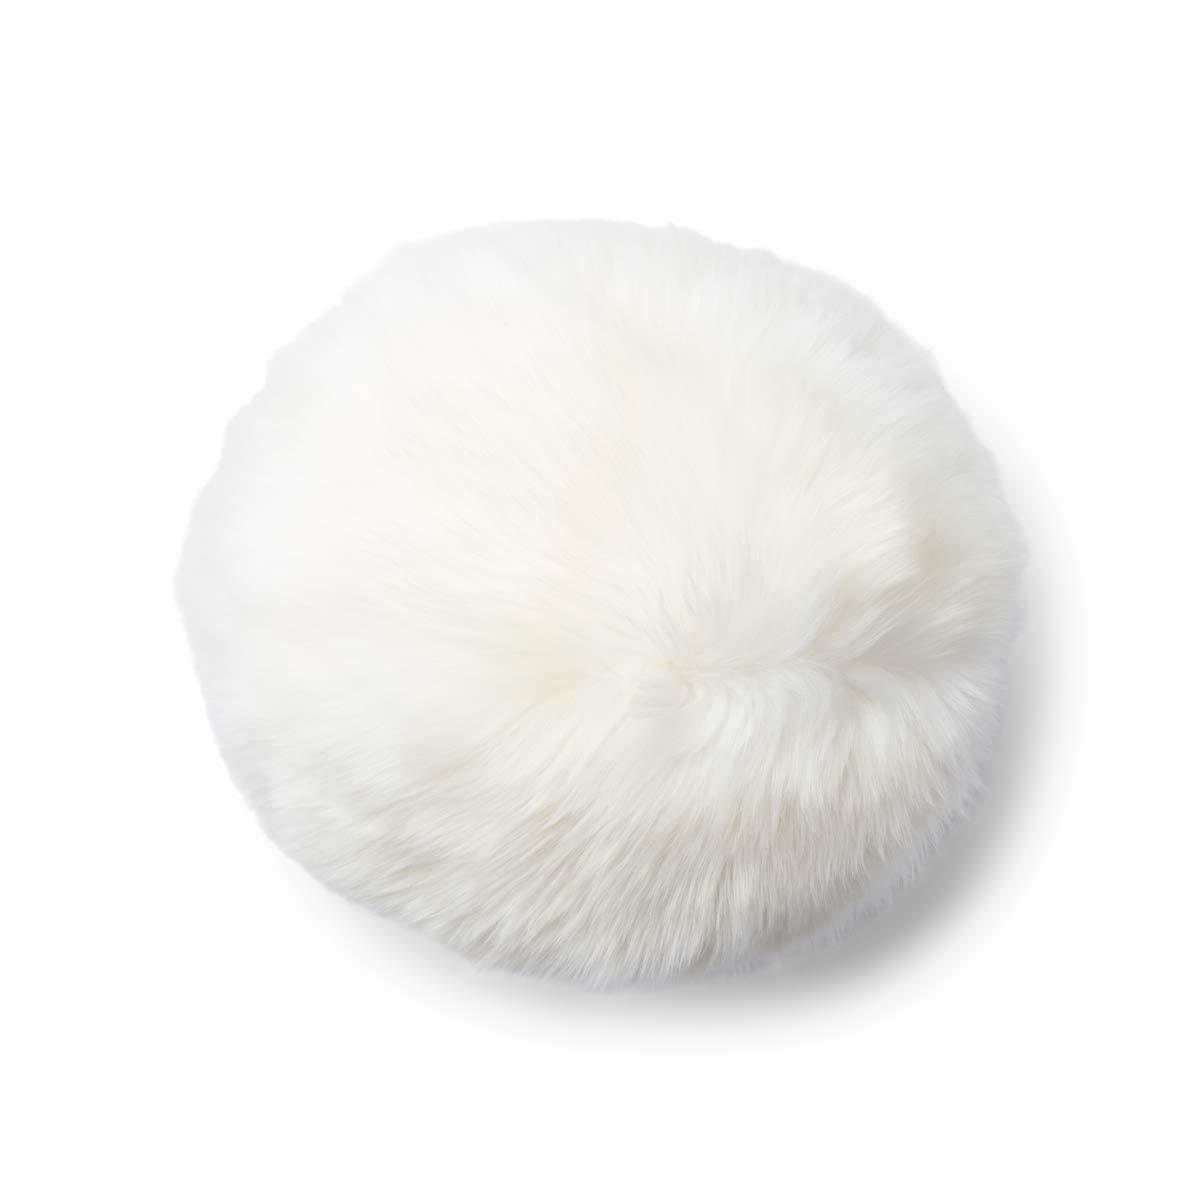 Angelite Round Cushion | New Zealand Sheepskin | Longwool - Naturescollection.eu